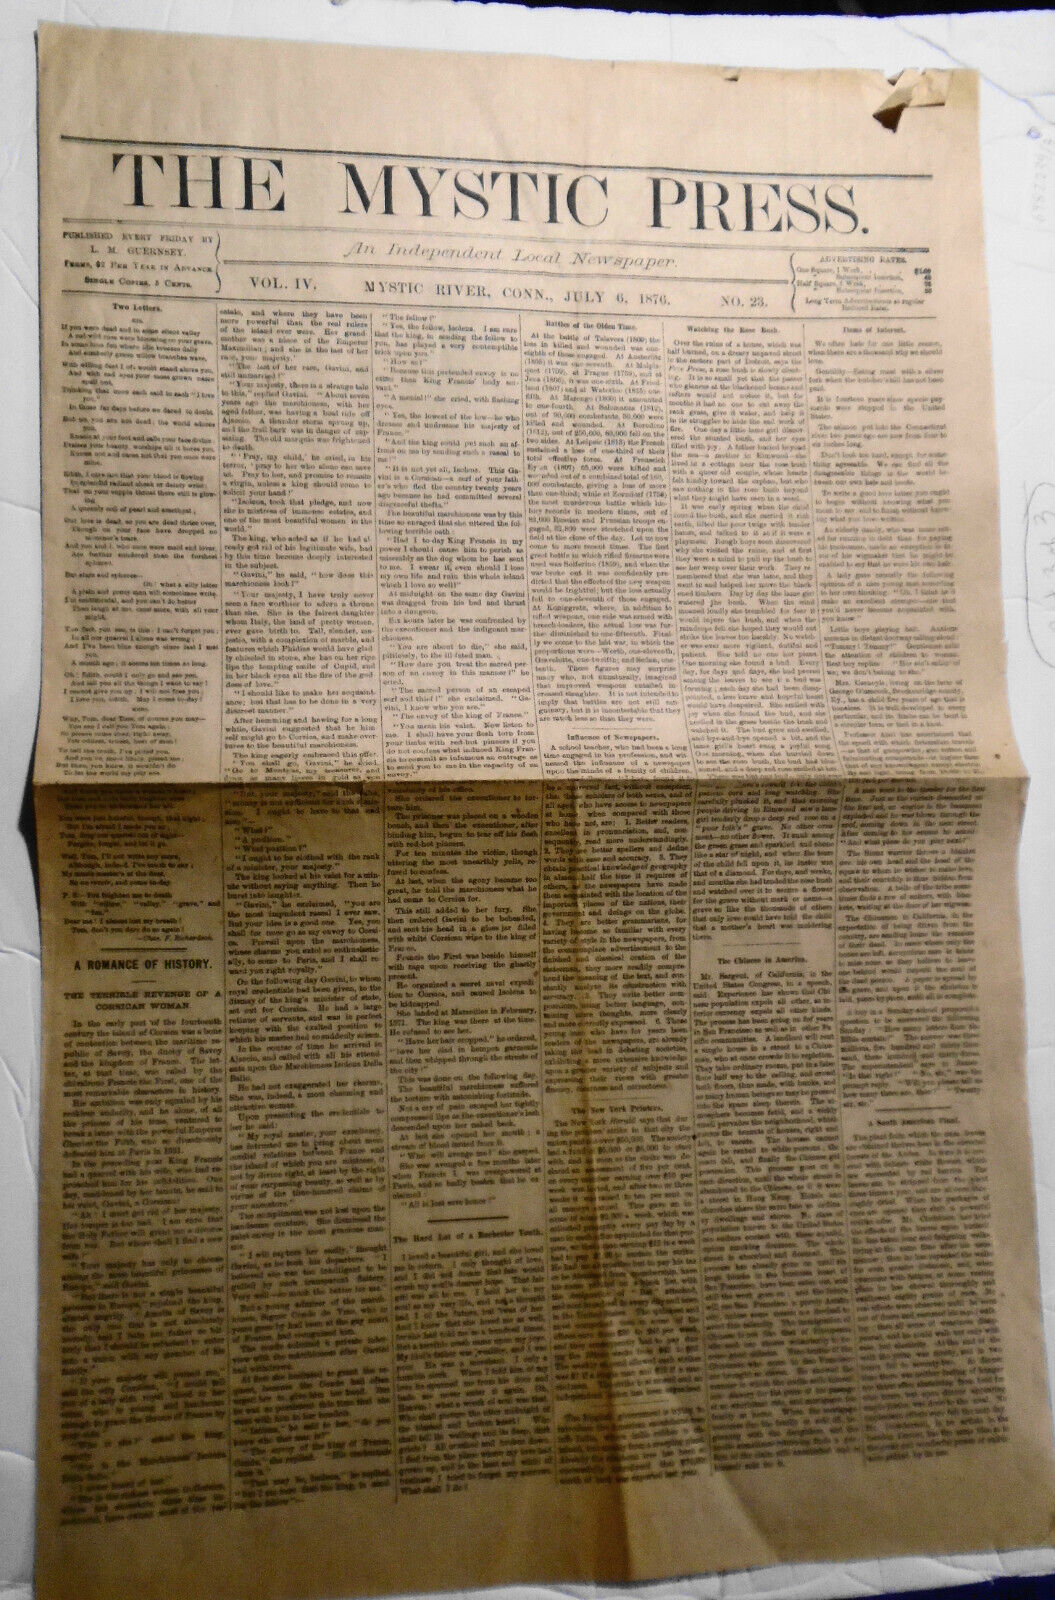 The Mystic Press, July 6, 1876. Stonington Connecticut newspaper (reprint)